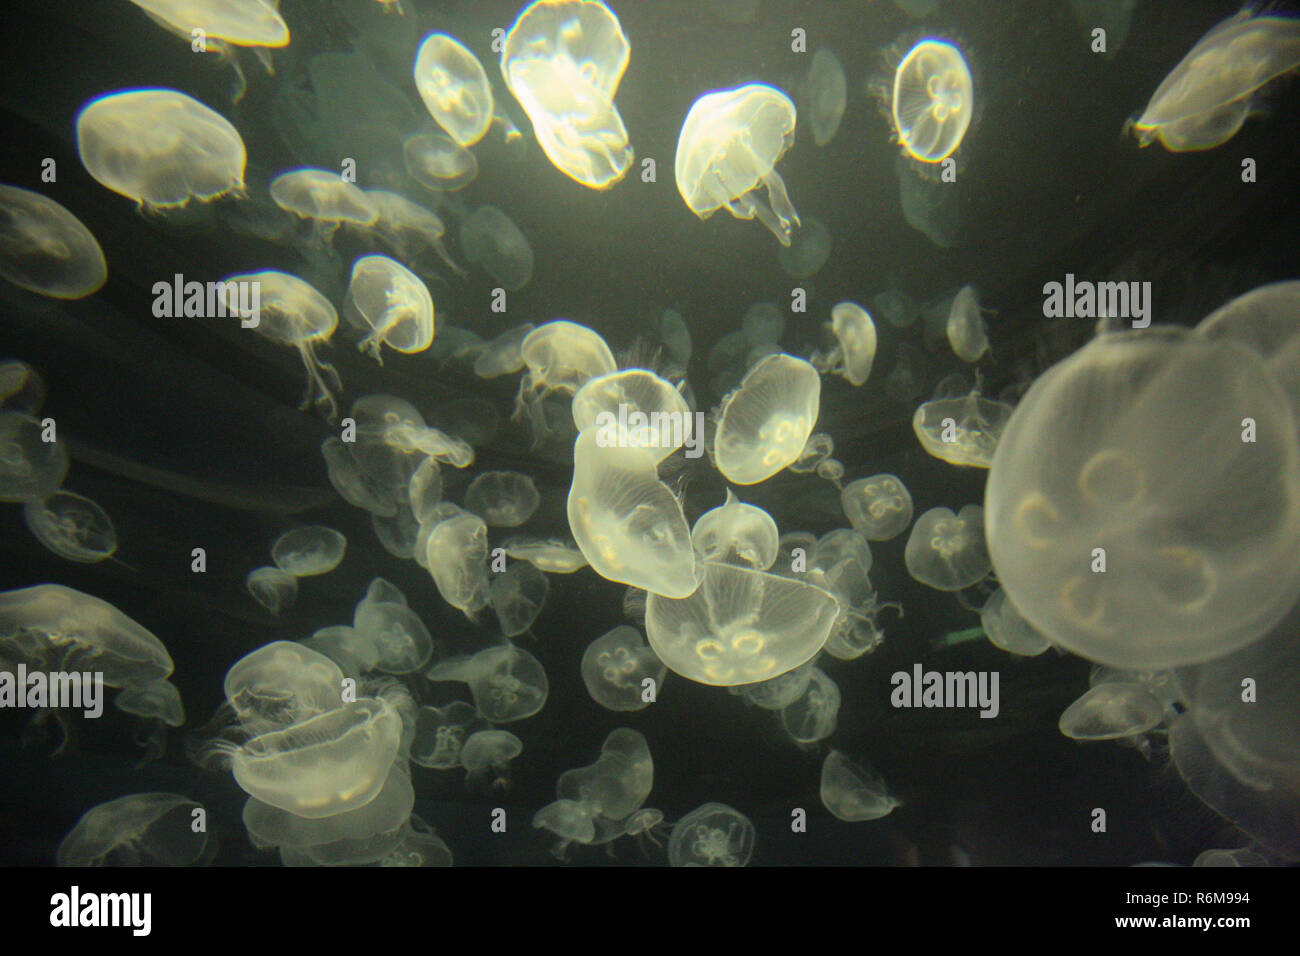 Jellyfish at Odysea Aquarium, Scottsdale, Arizona Stock Photo